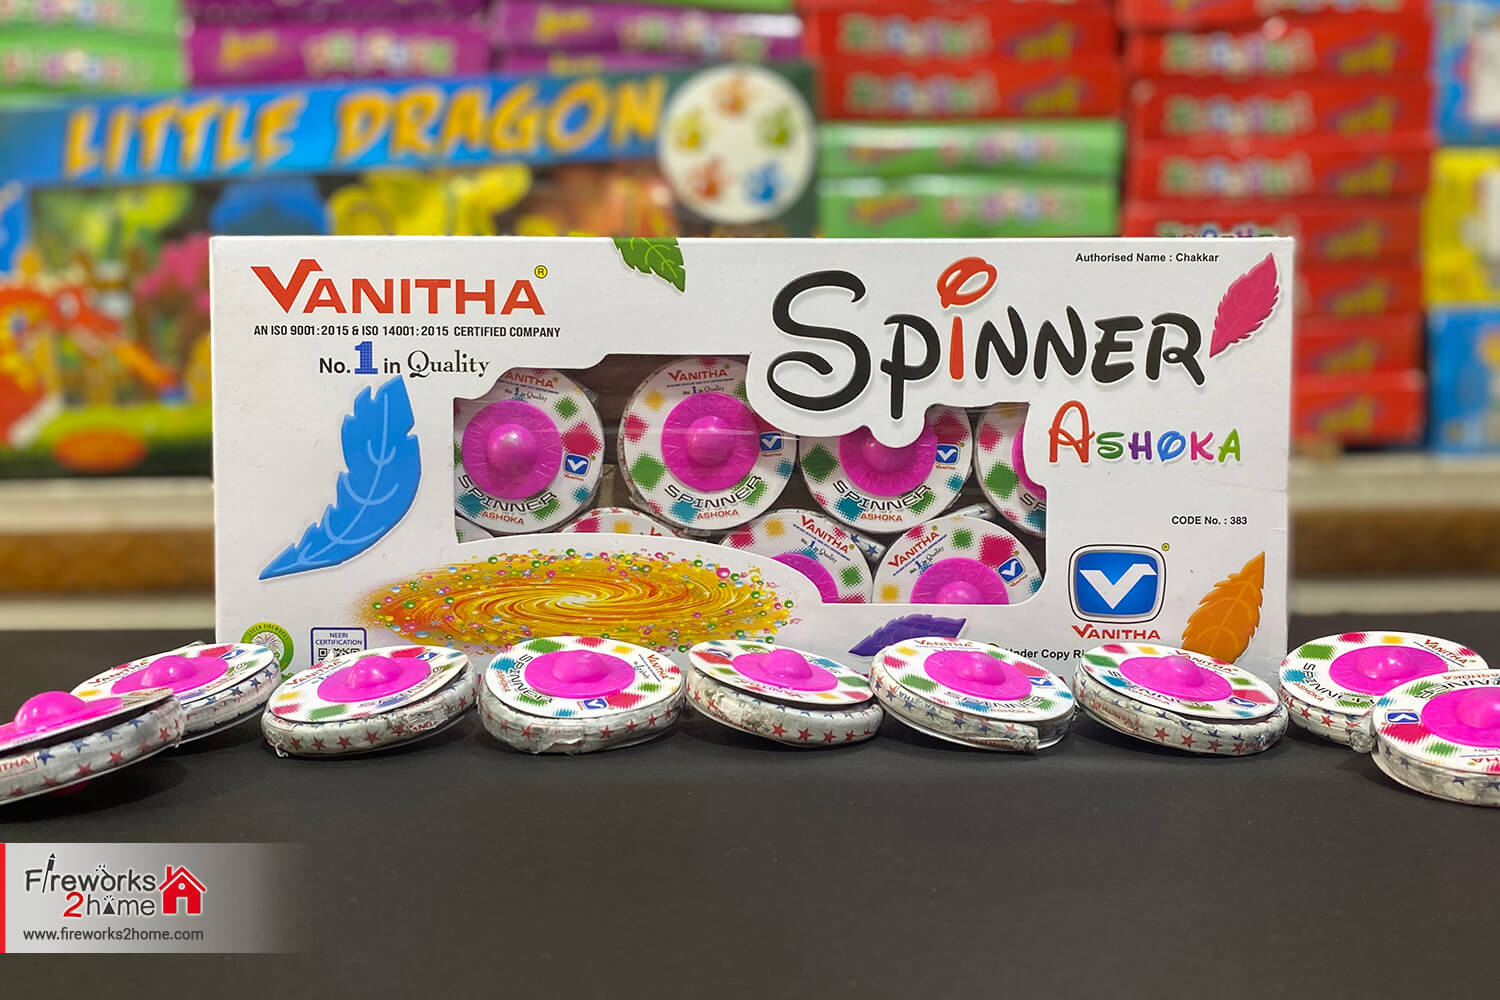 Spinner Ashoka by Vanitha (pieces per box 10) - Fireworks 2 Home